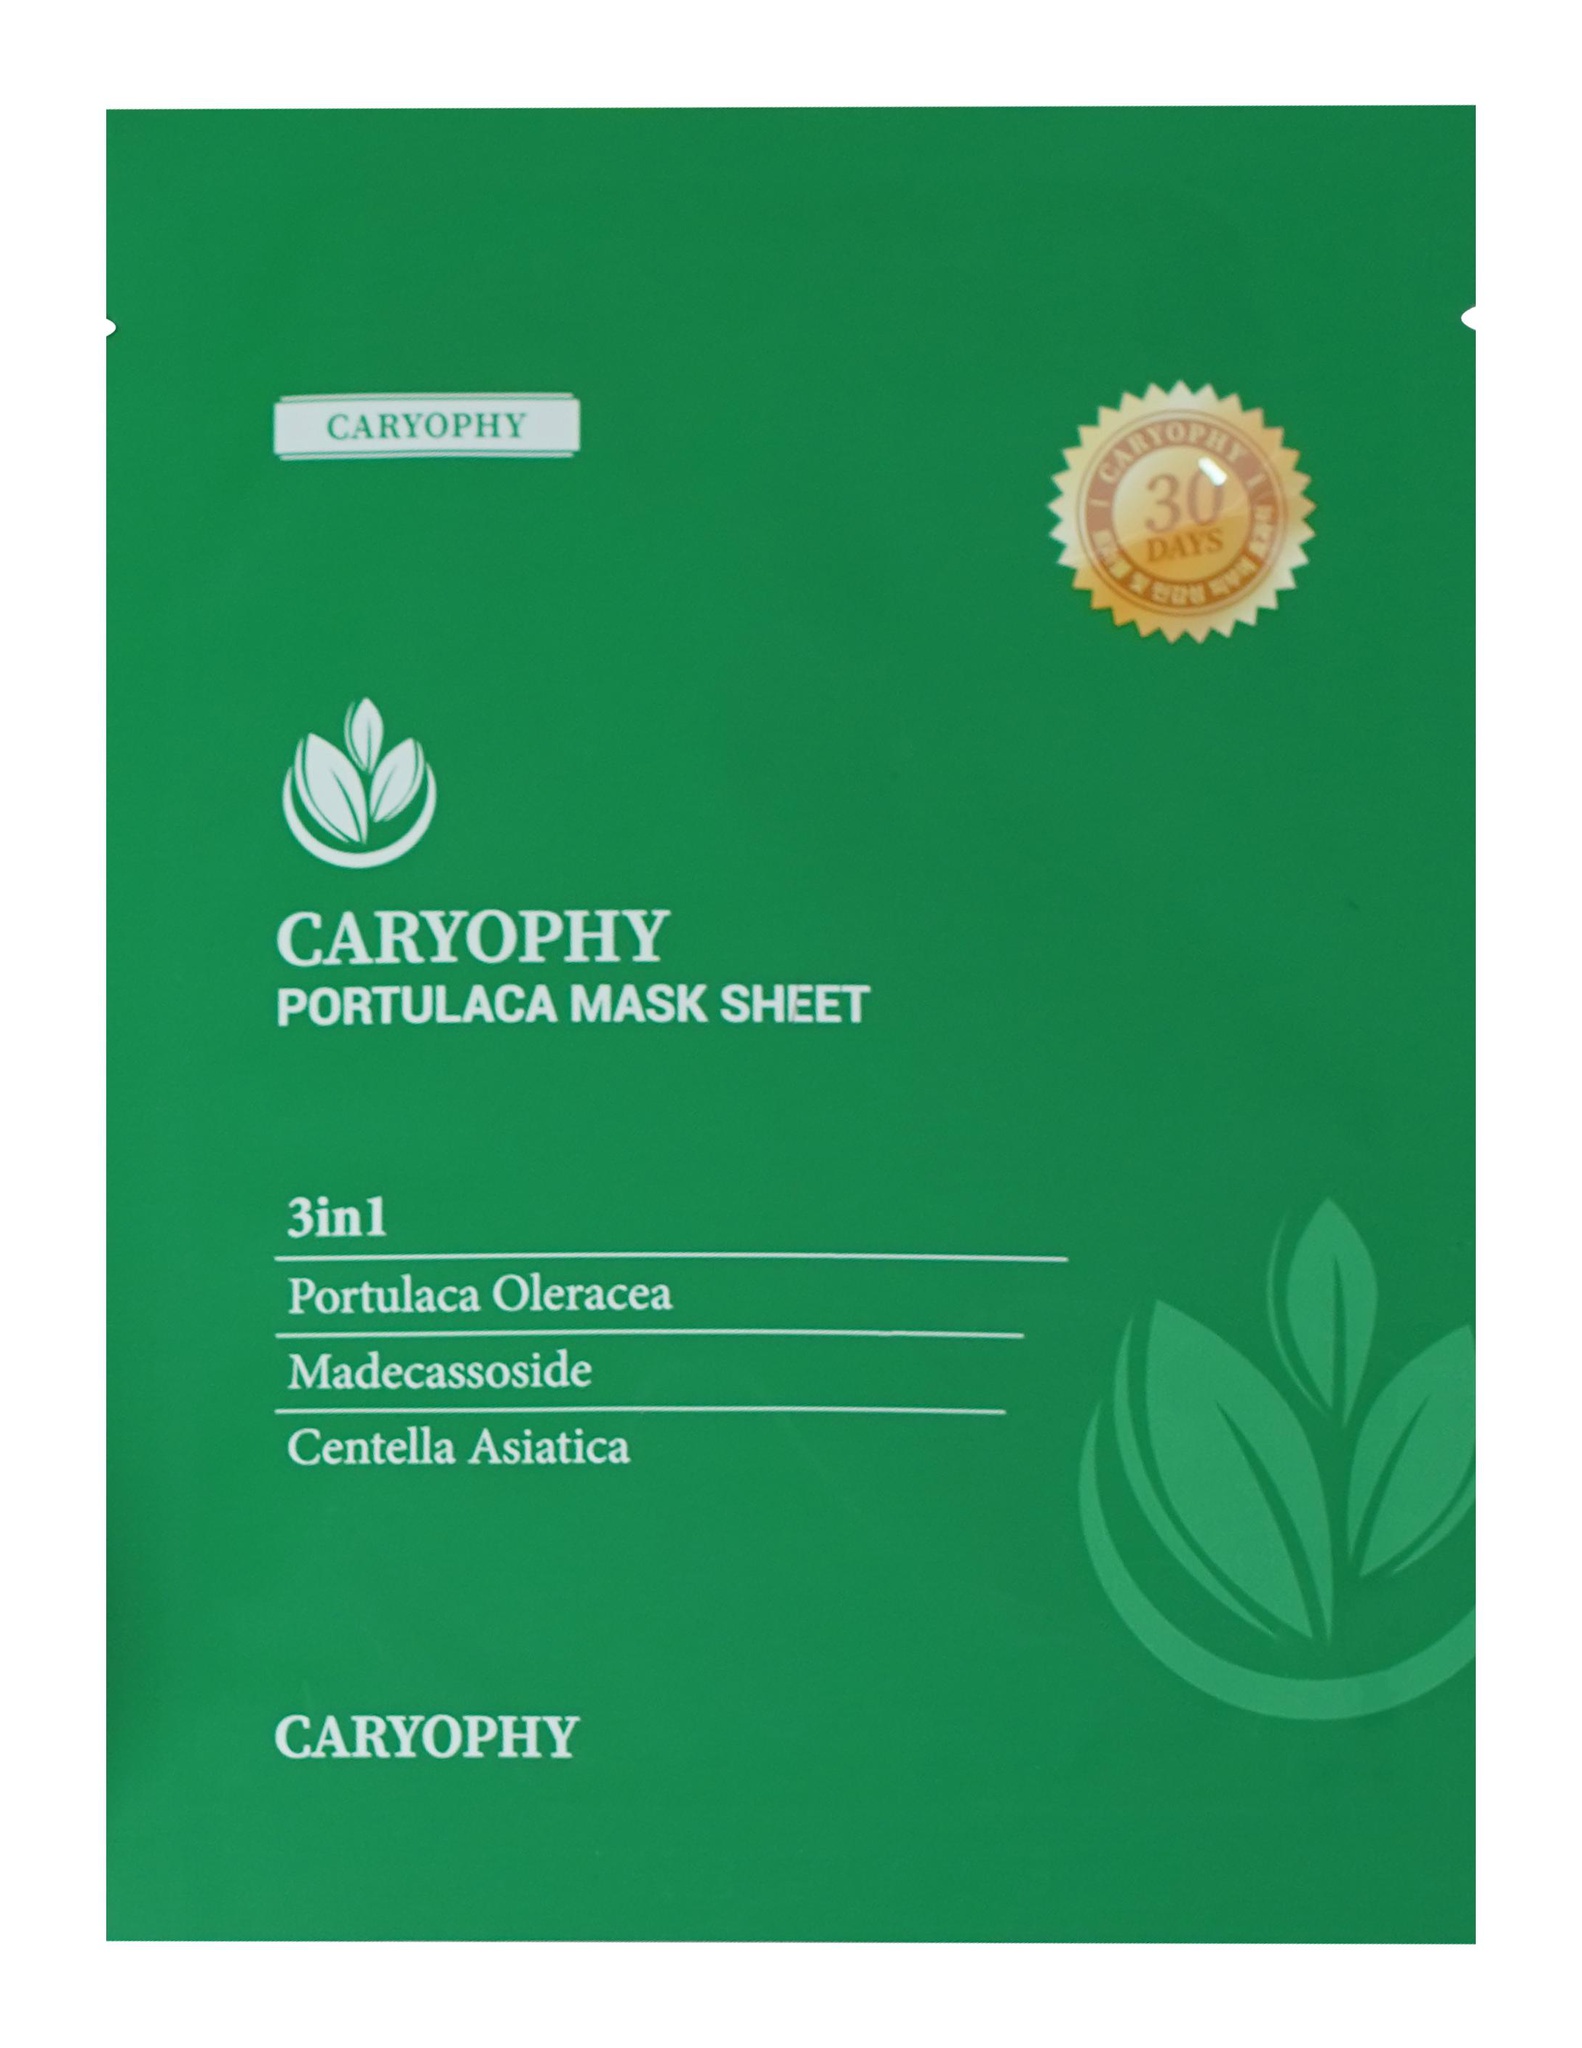 CARYOPHY Portulaca Mask Sheet